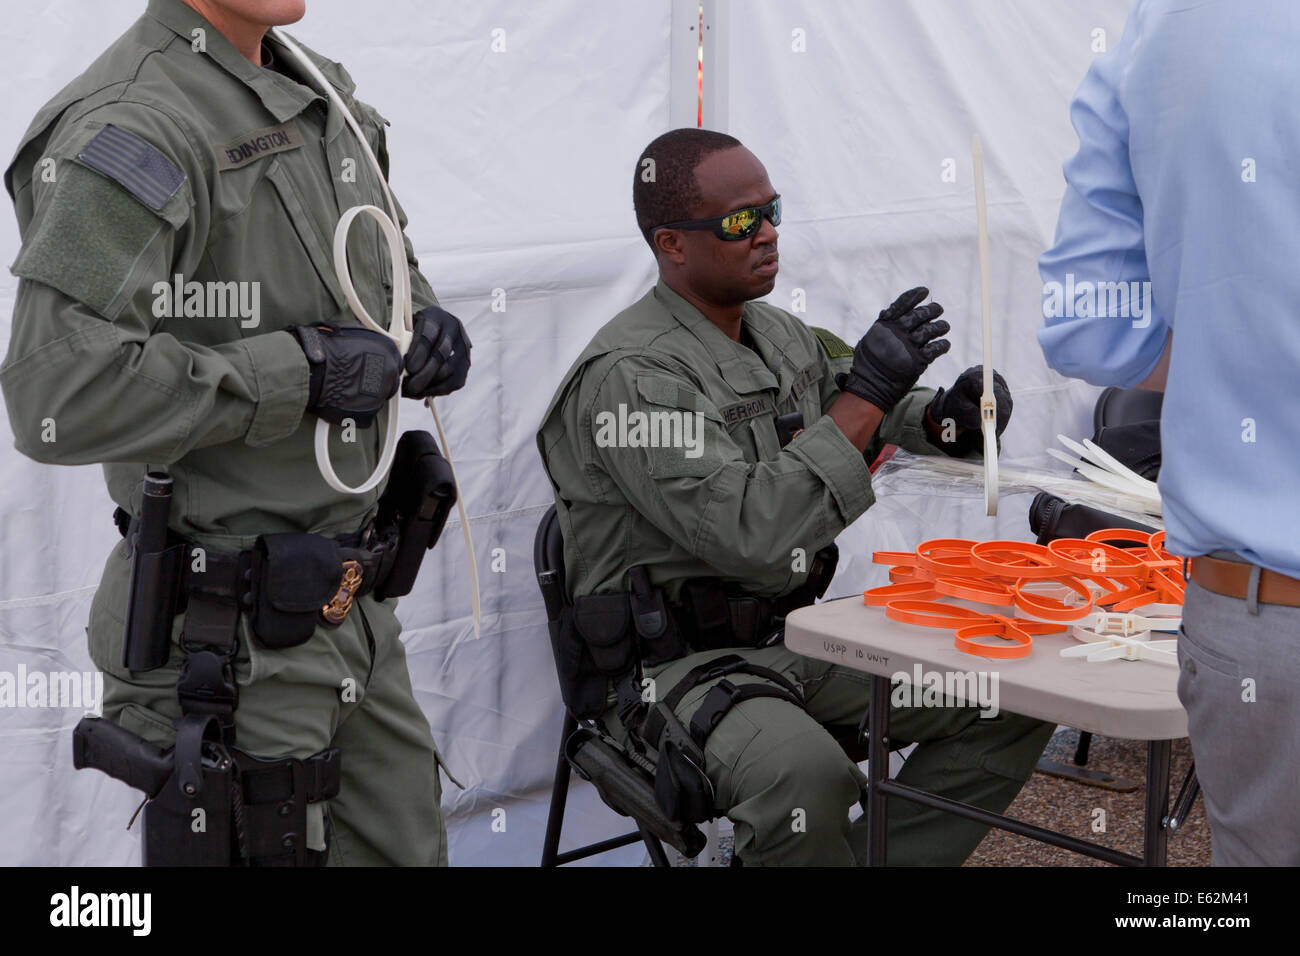 Police preparing plastic handcuffs during political protest - Washington, DC USA Stock Photo